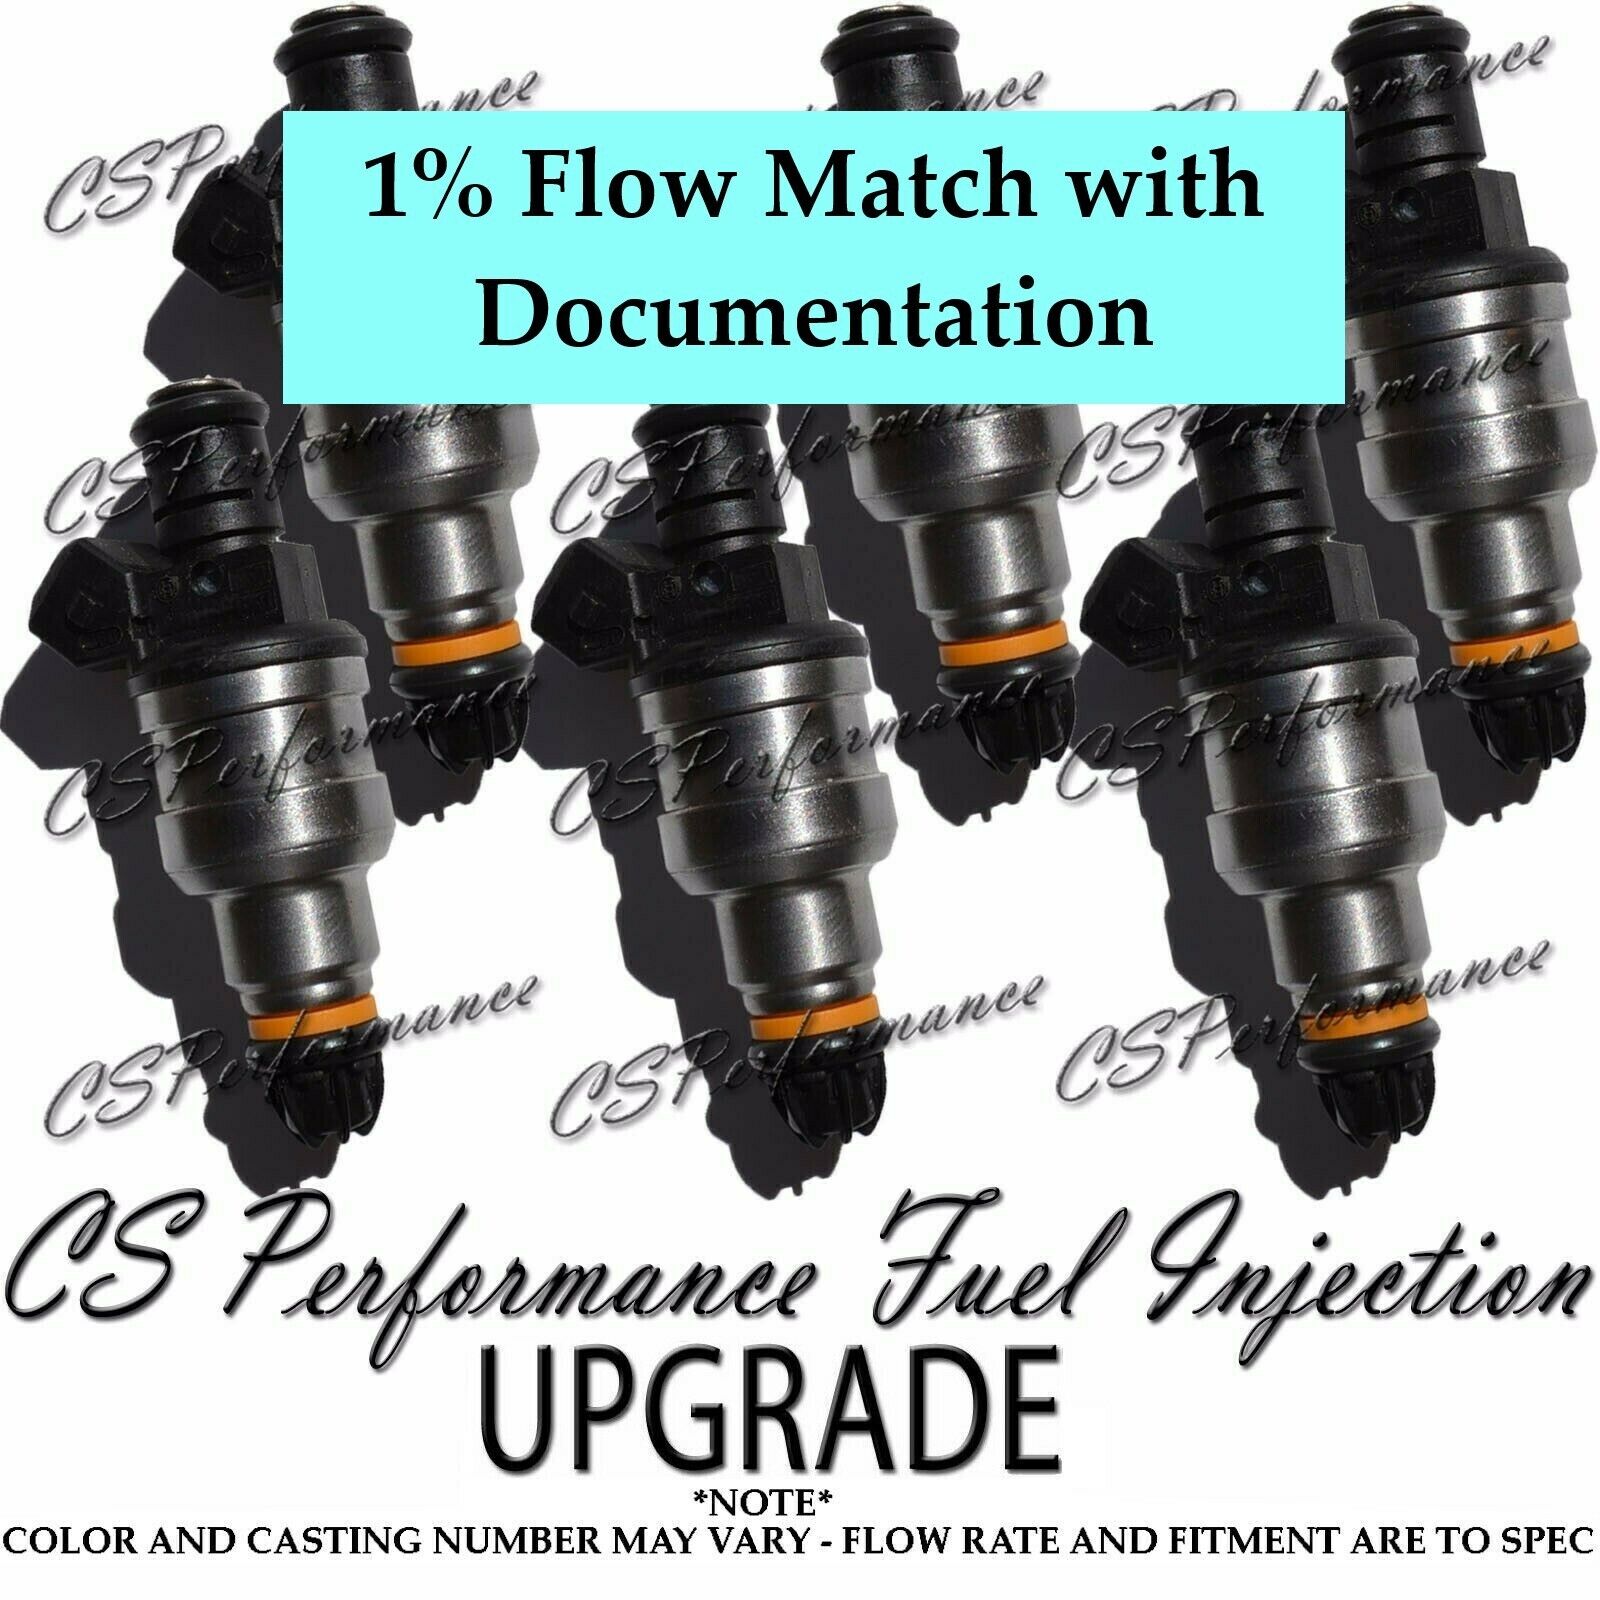 1% Flow Match Upgrade Fuel Injectors for 89-93 Chevy Olds Pontiac 3.1L 3.4L V6